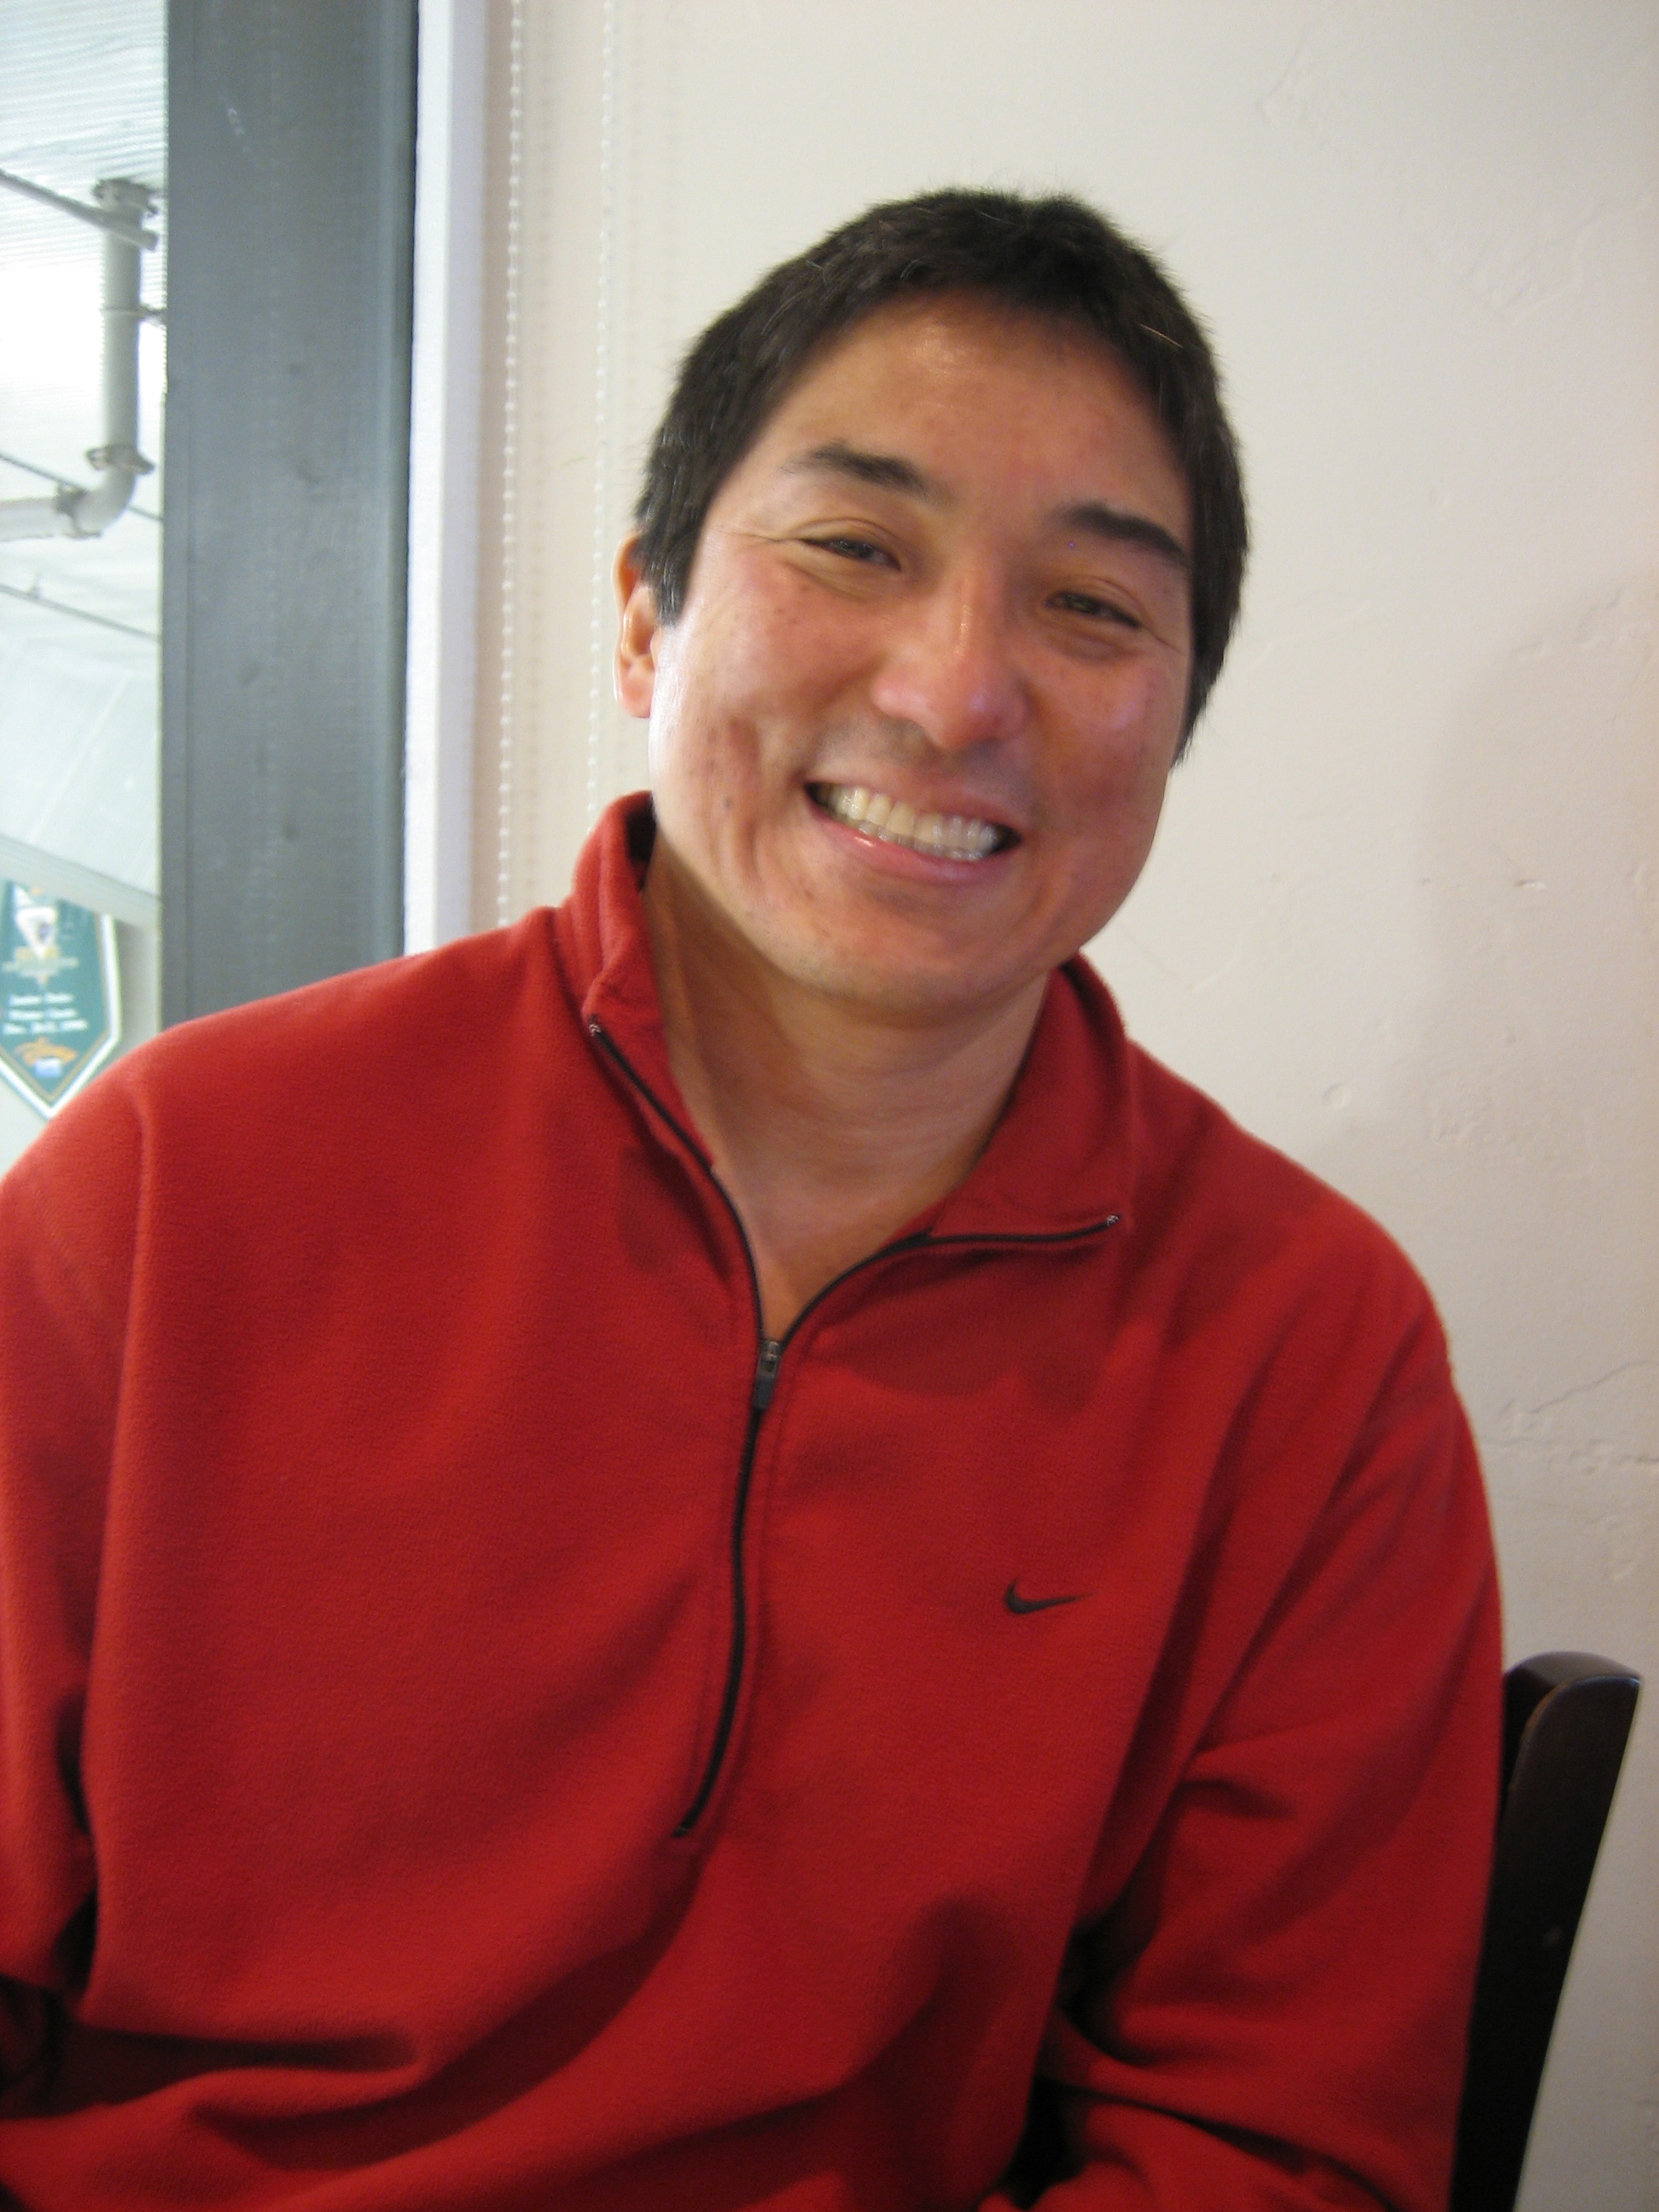 File:Guy Kawasaki, 2006.jpg - Wikimedia Commons